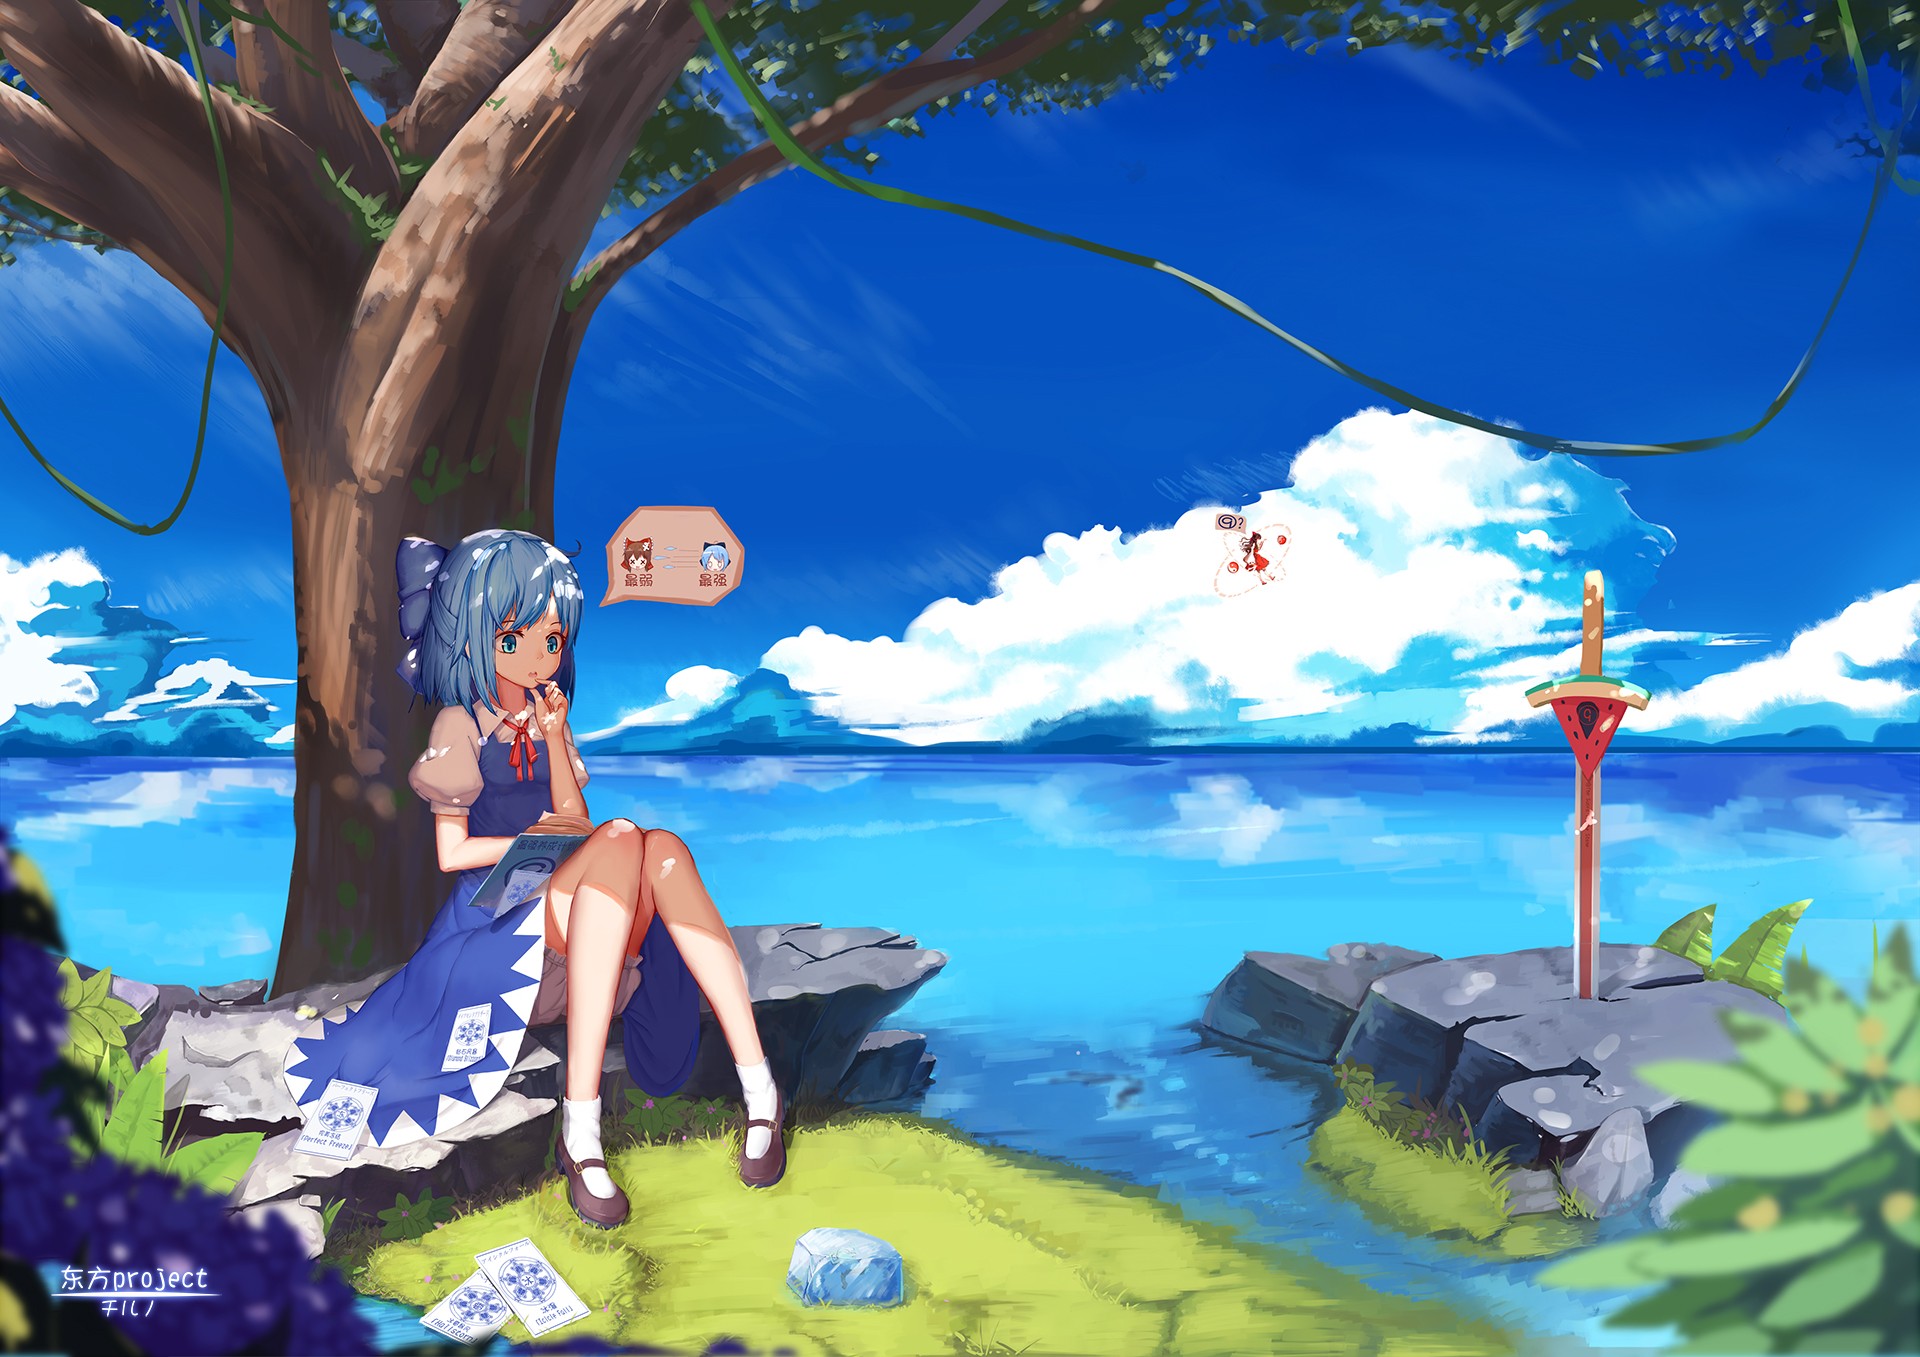 Anime 1920x1357 anime anime girls Cirno legs blue hair sea sword sky clouds landscape trees dappled sunlight